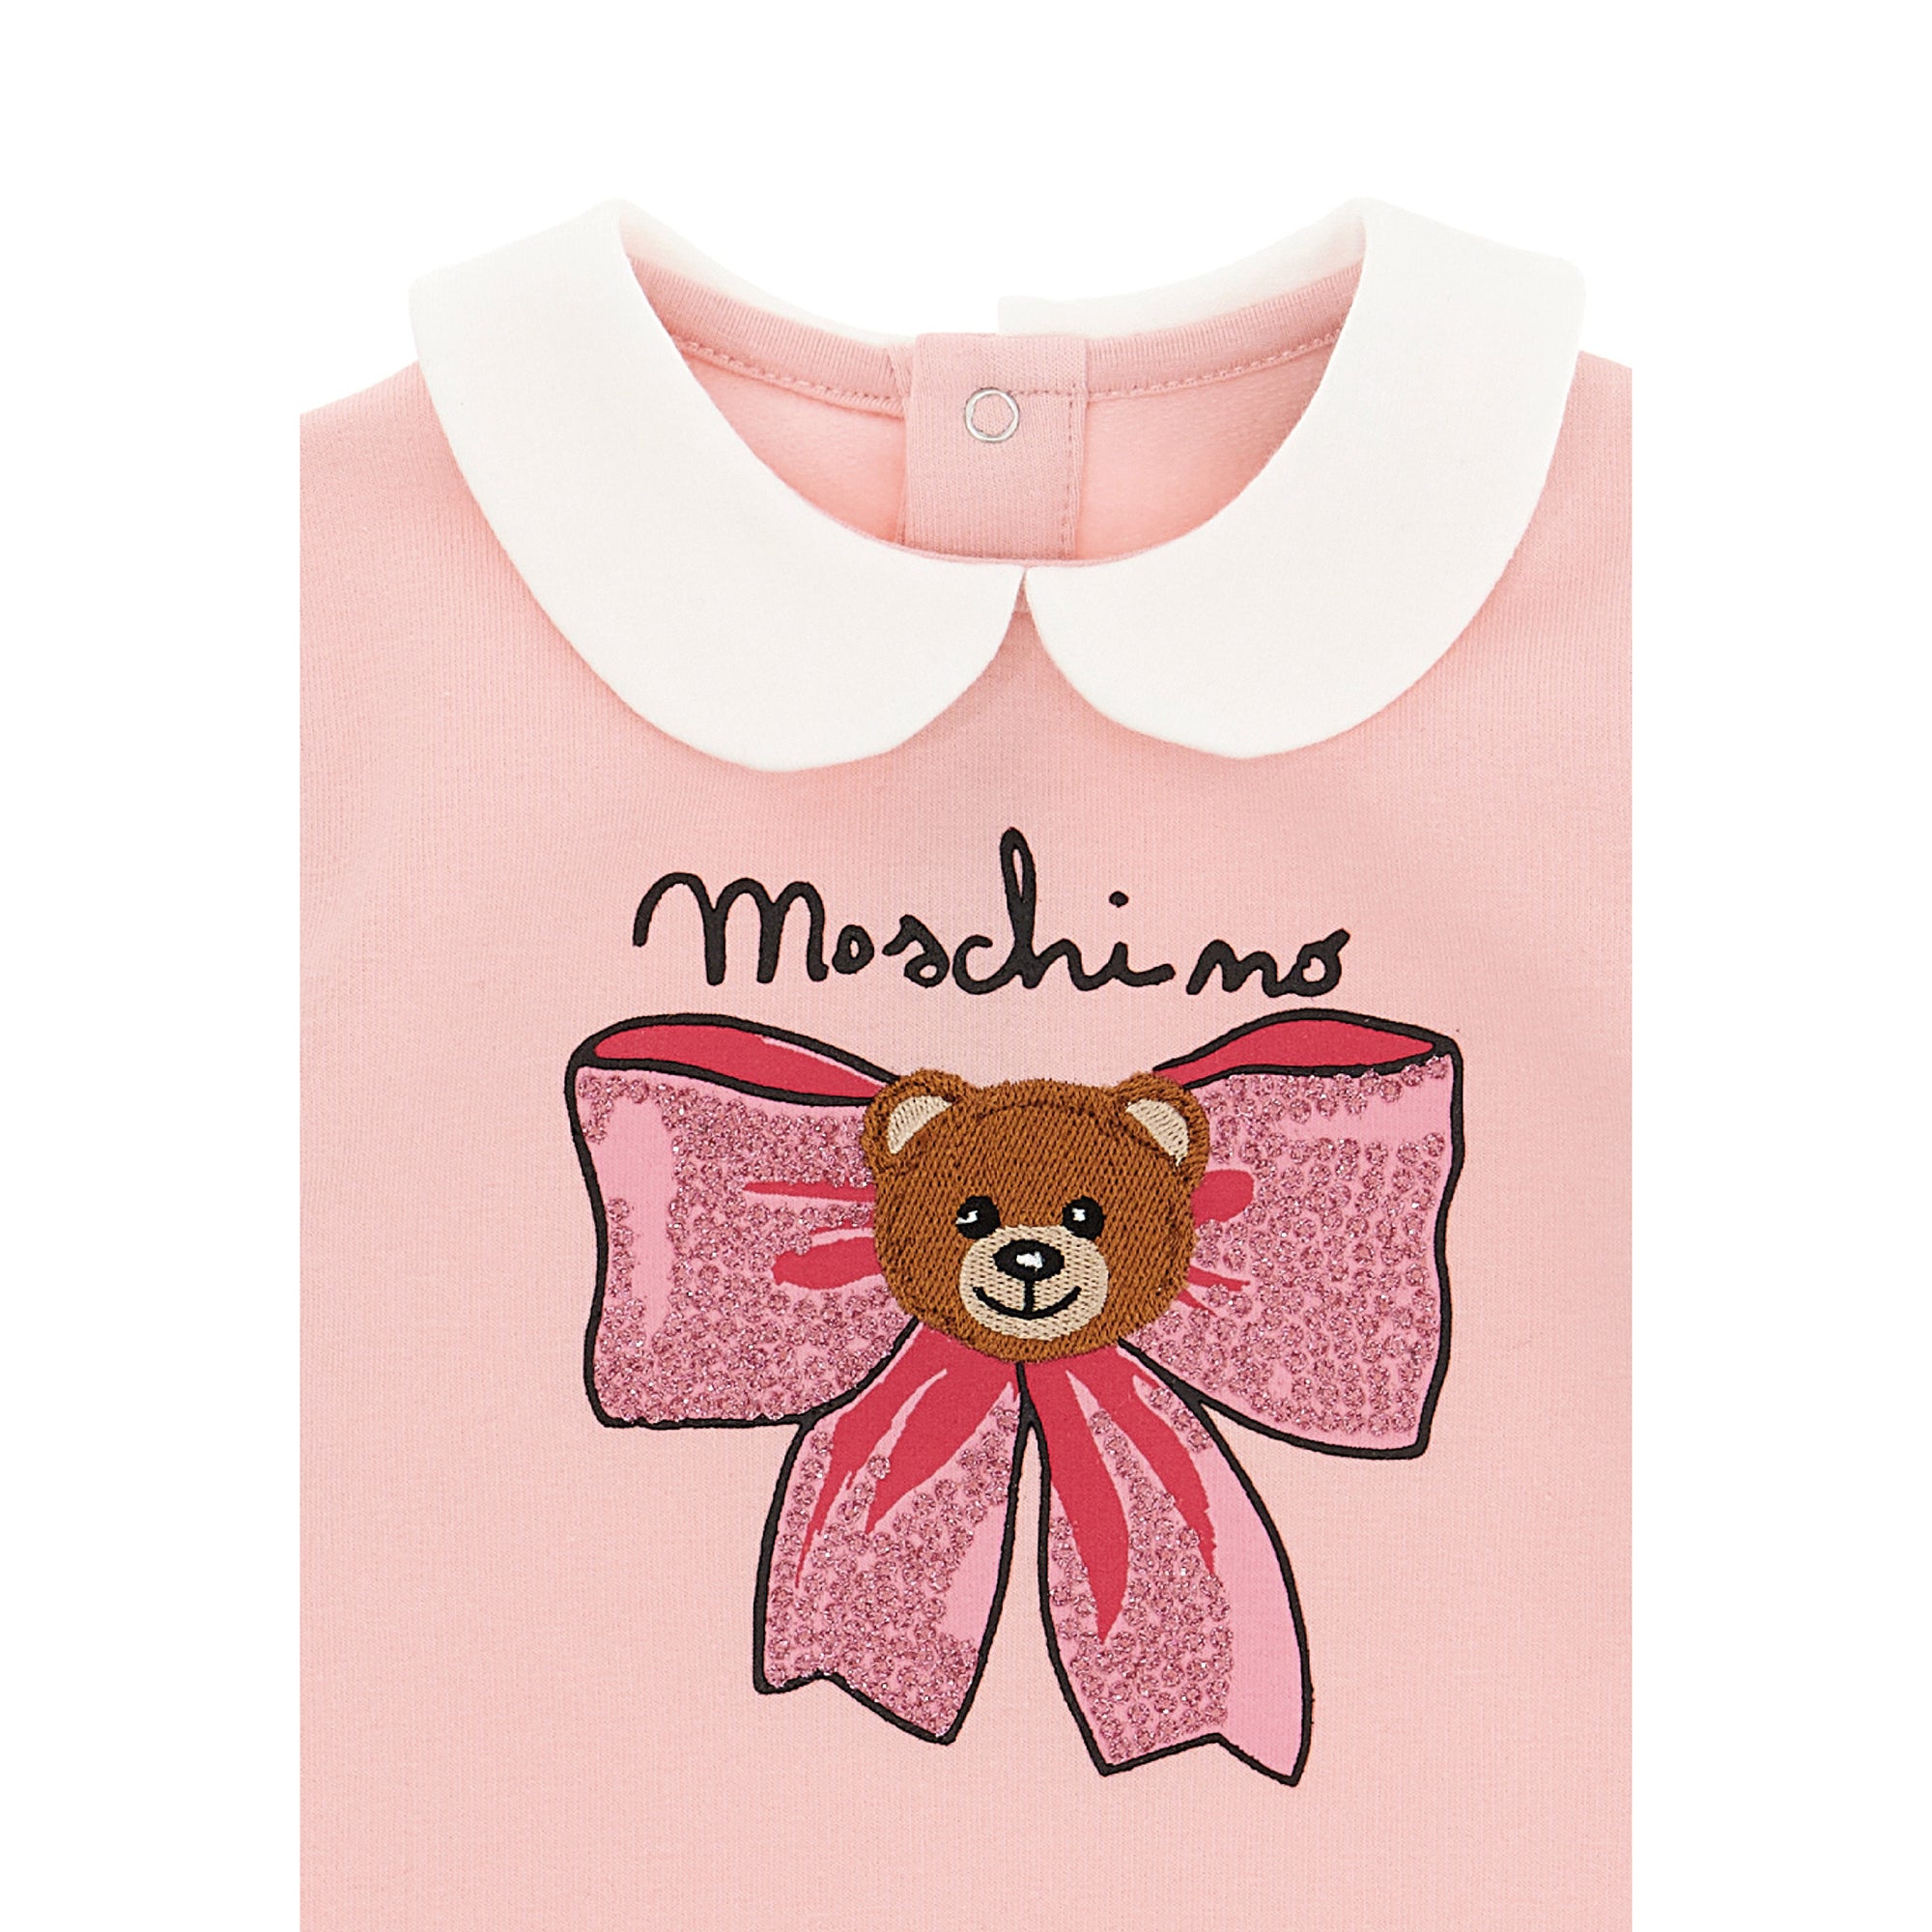 Baby Girls Pink Teddy Bear Dress